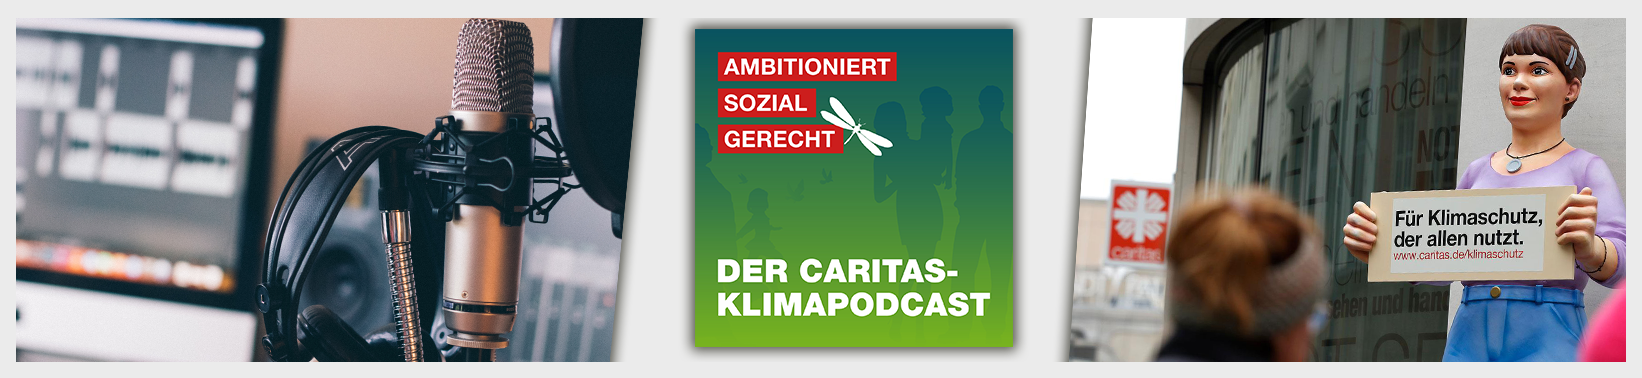 Caritas KLimapodcast Banner